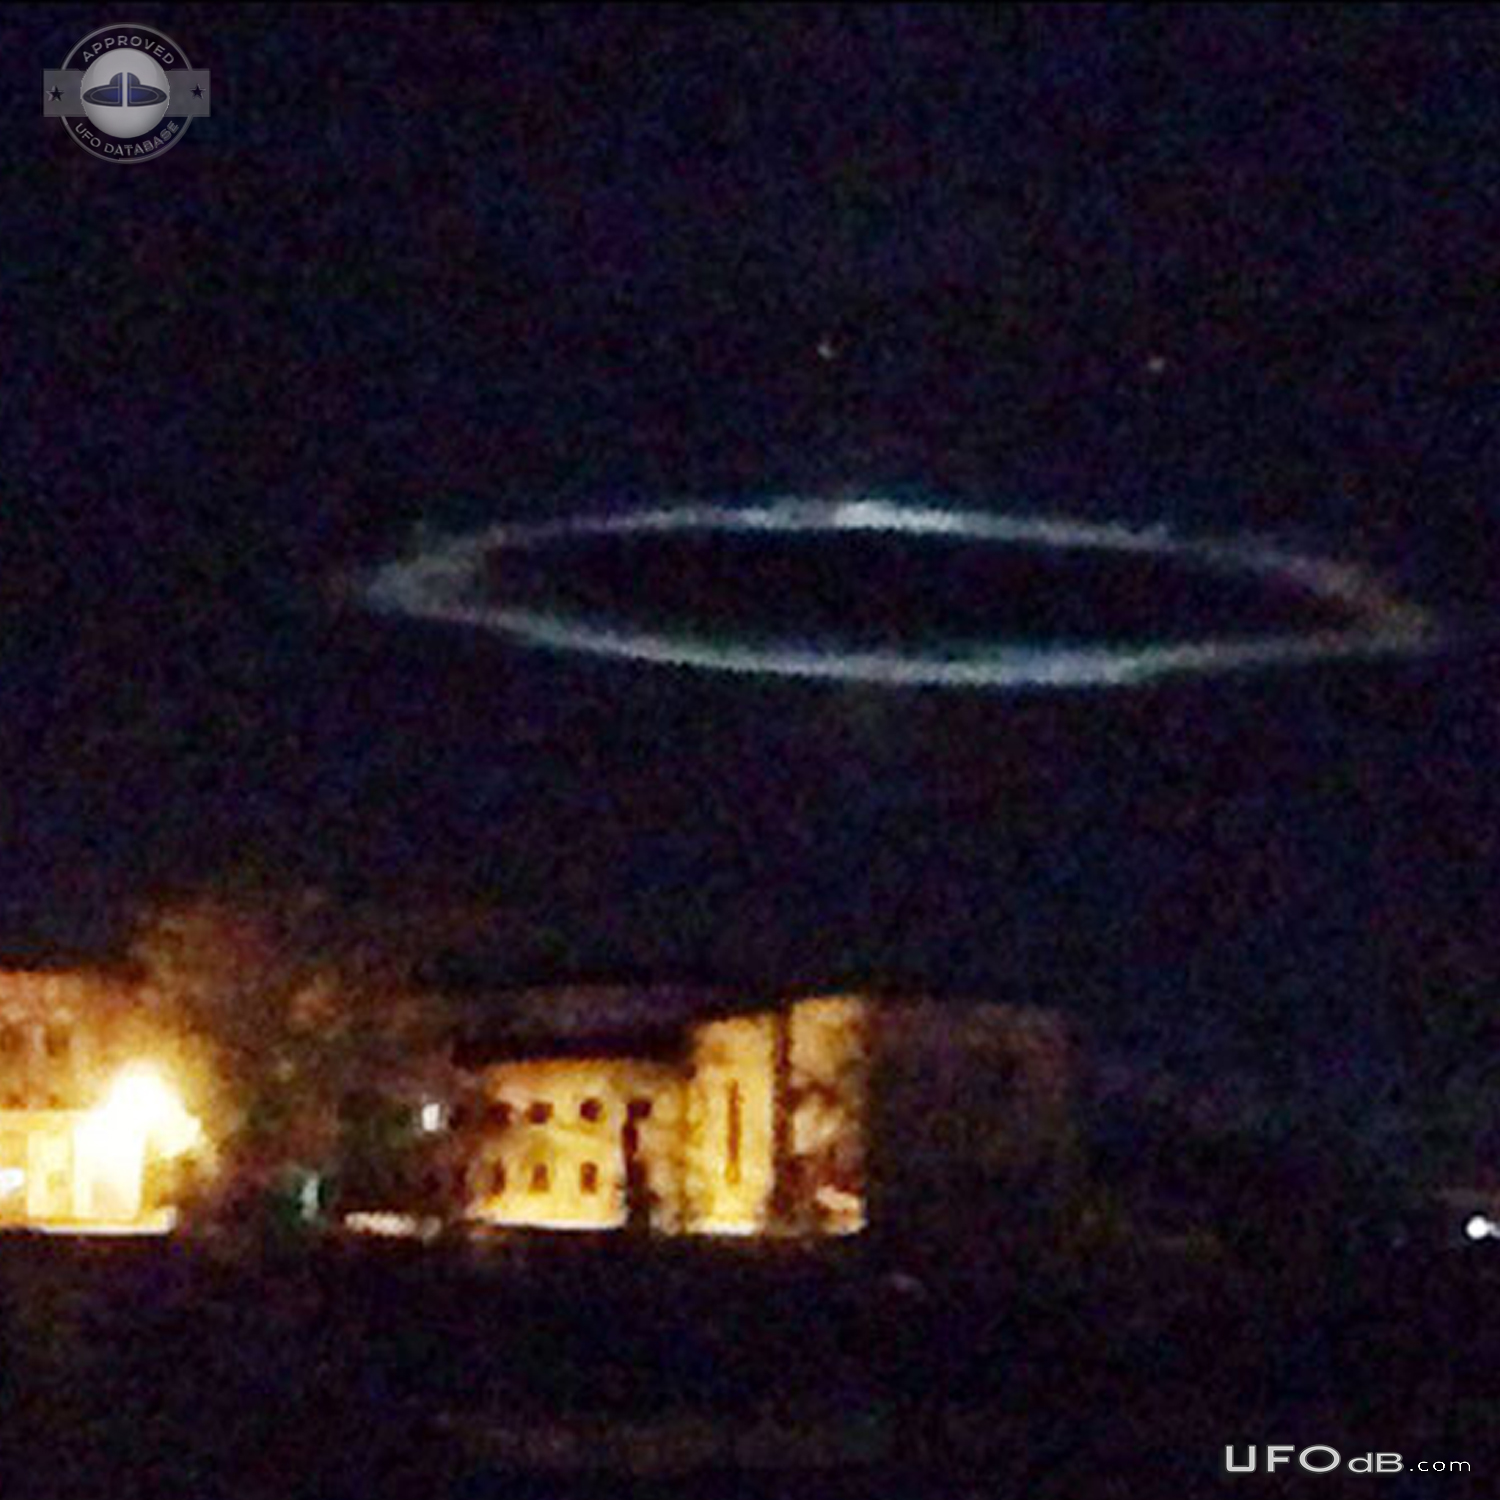 Saucer UFOs seen in Ulan-Ude close to the LVRZ factory - Buryatia Russ UFO Picture #745-2